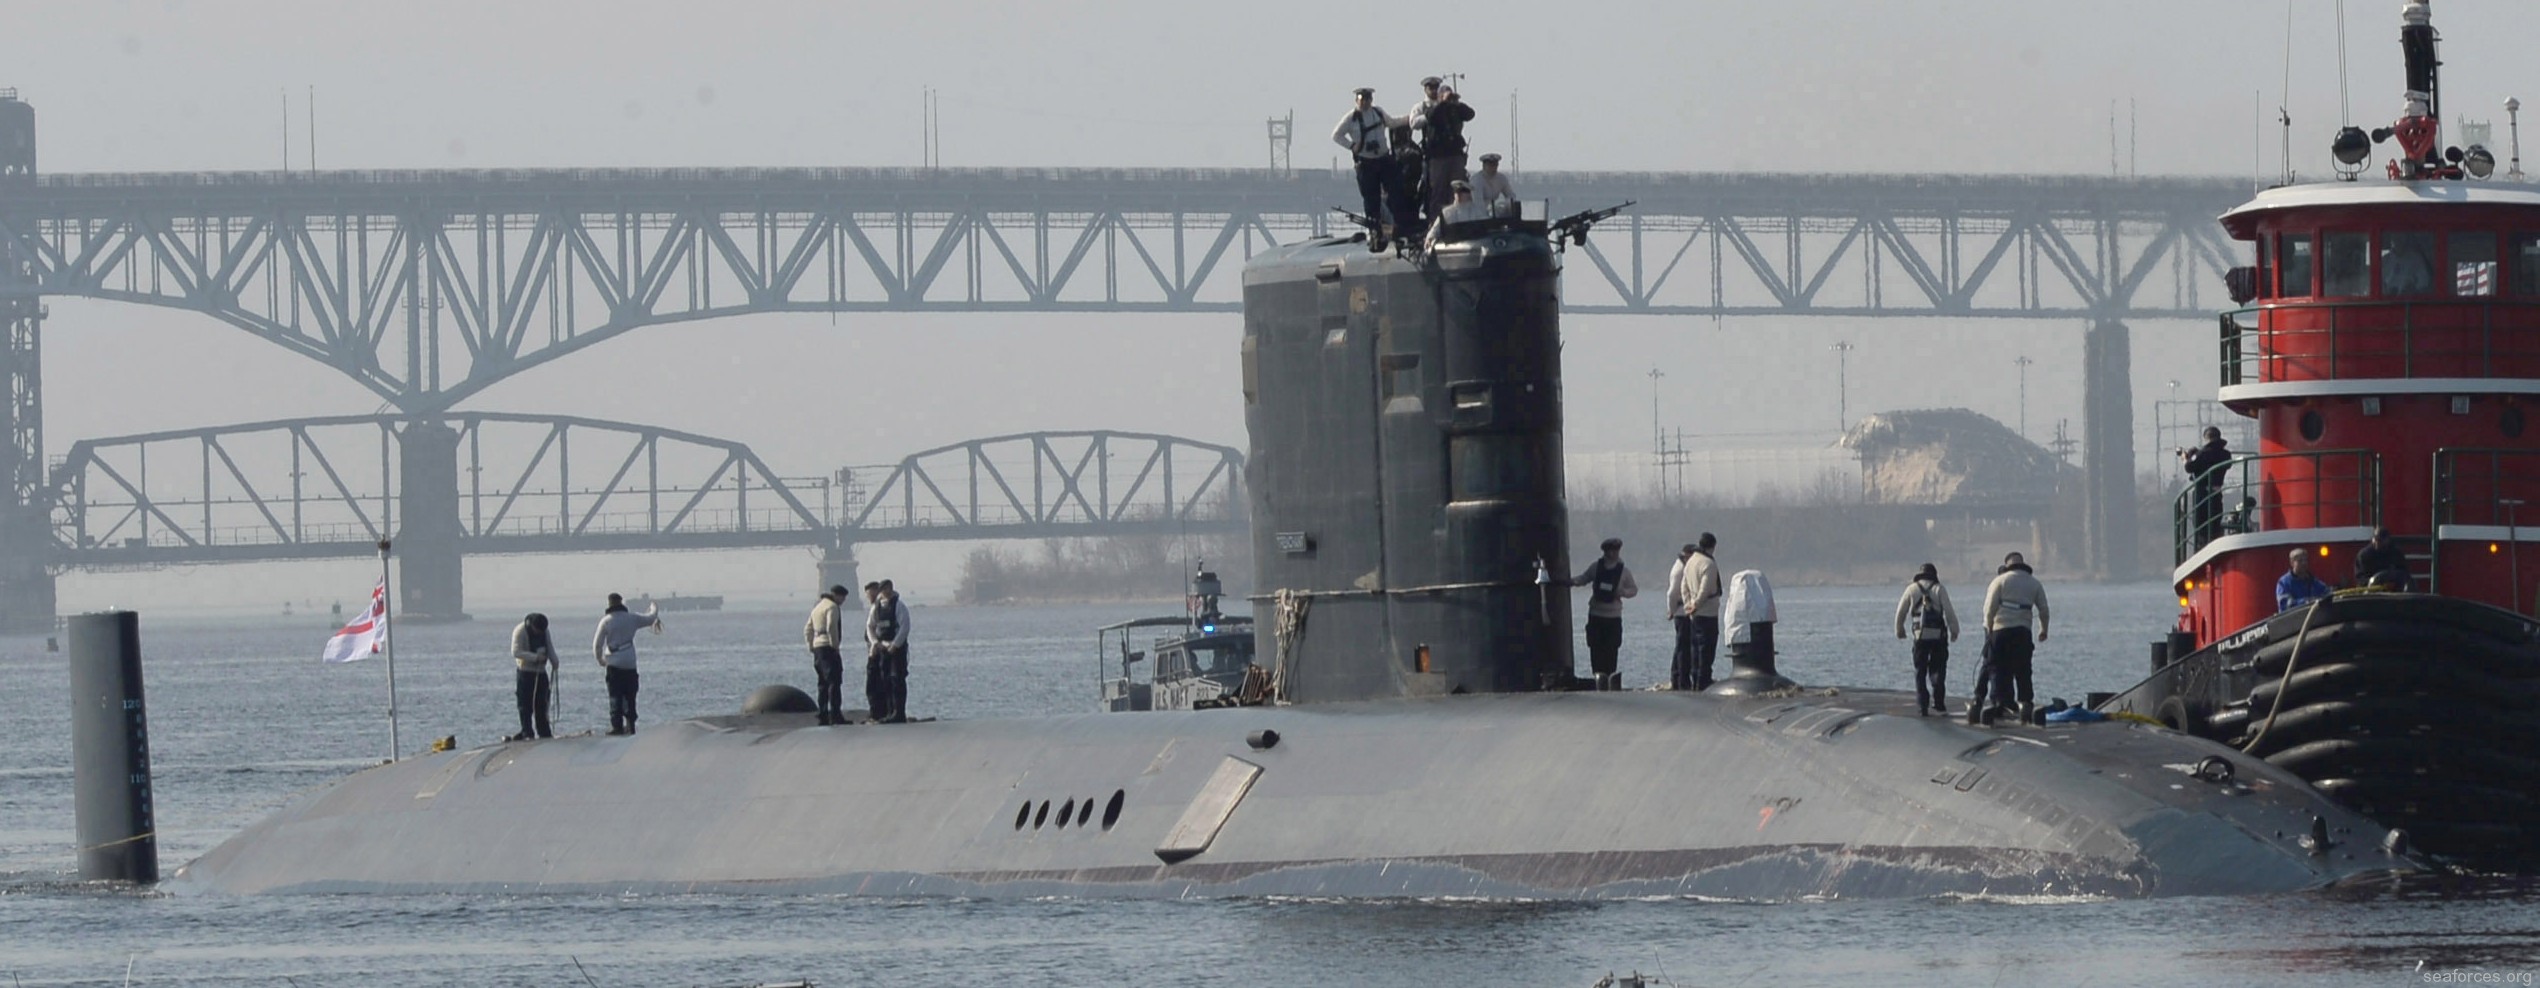 hms trenchant s-91 trafalgar class attack submarine royal navy 09